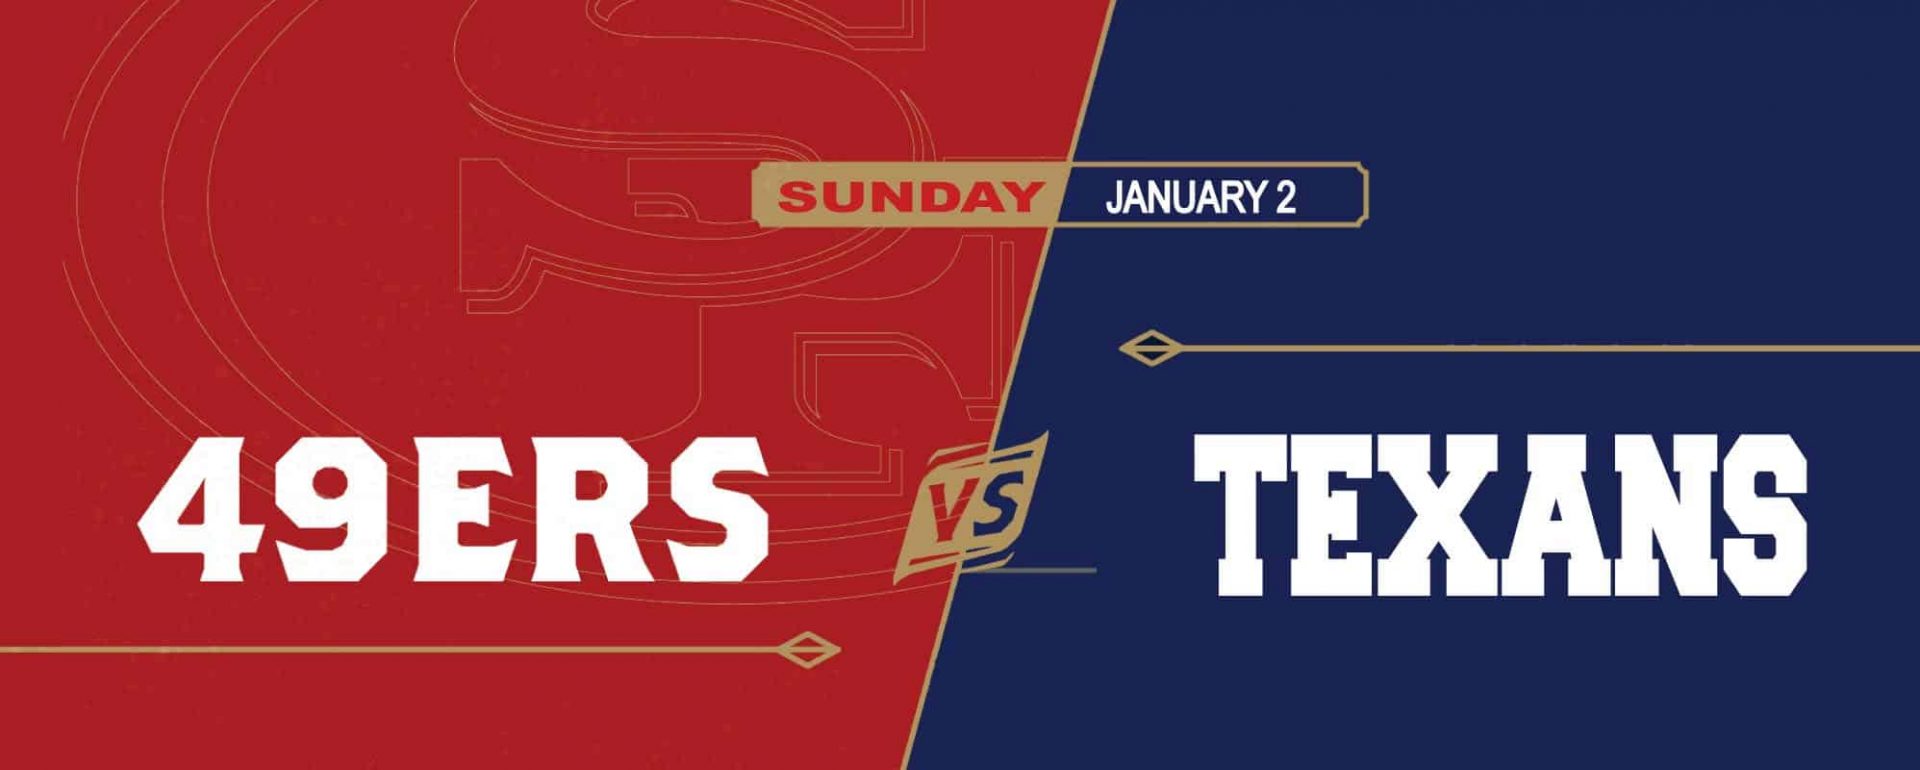 49ers vs. Texans at Levi's Stadium